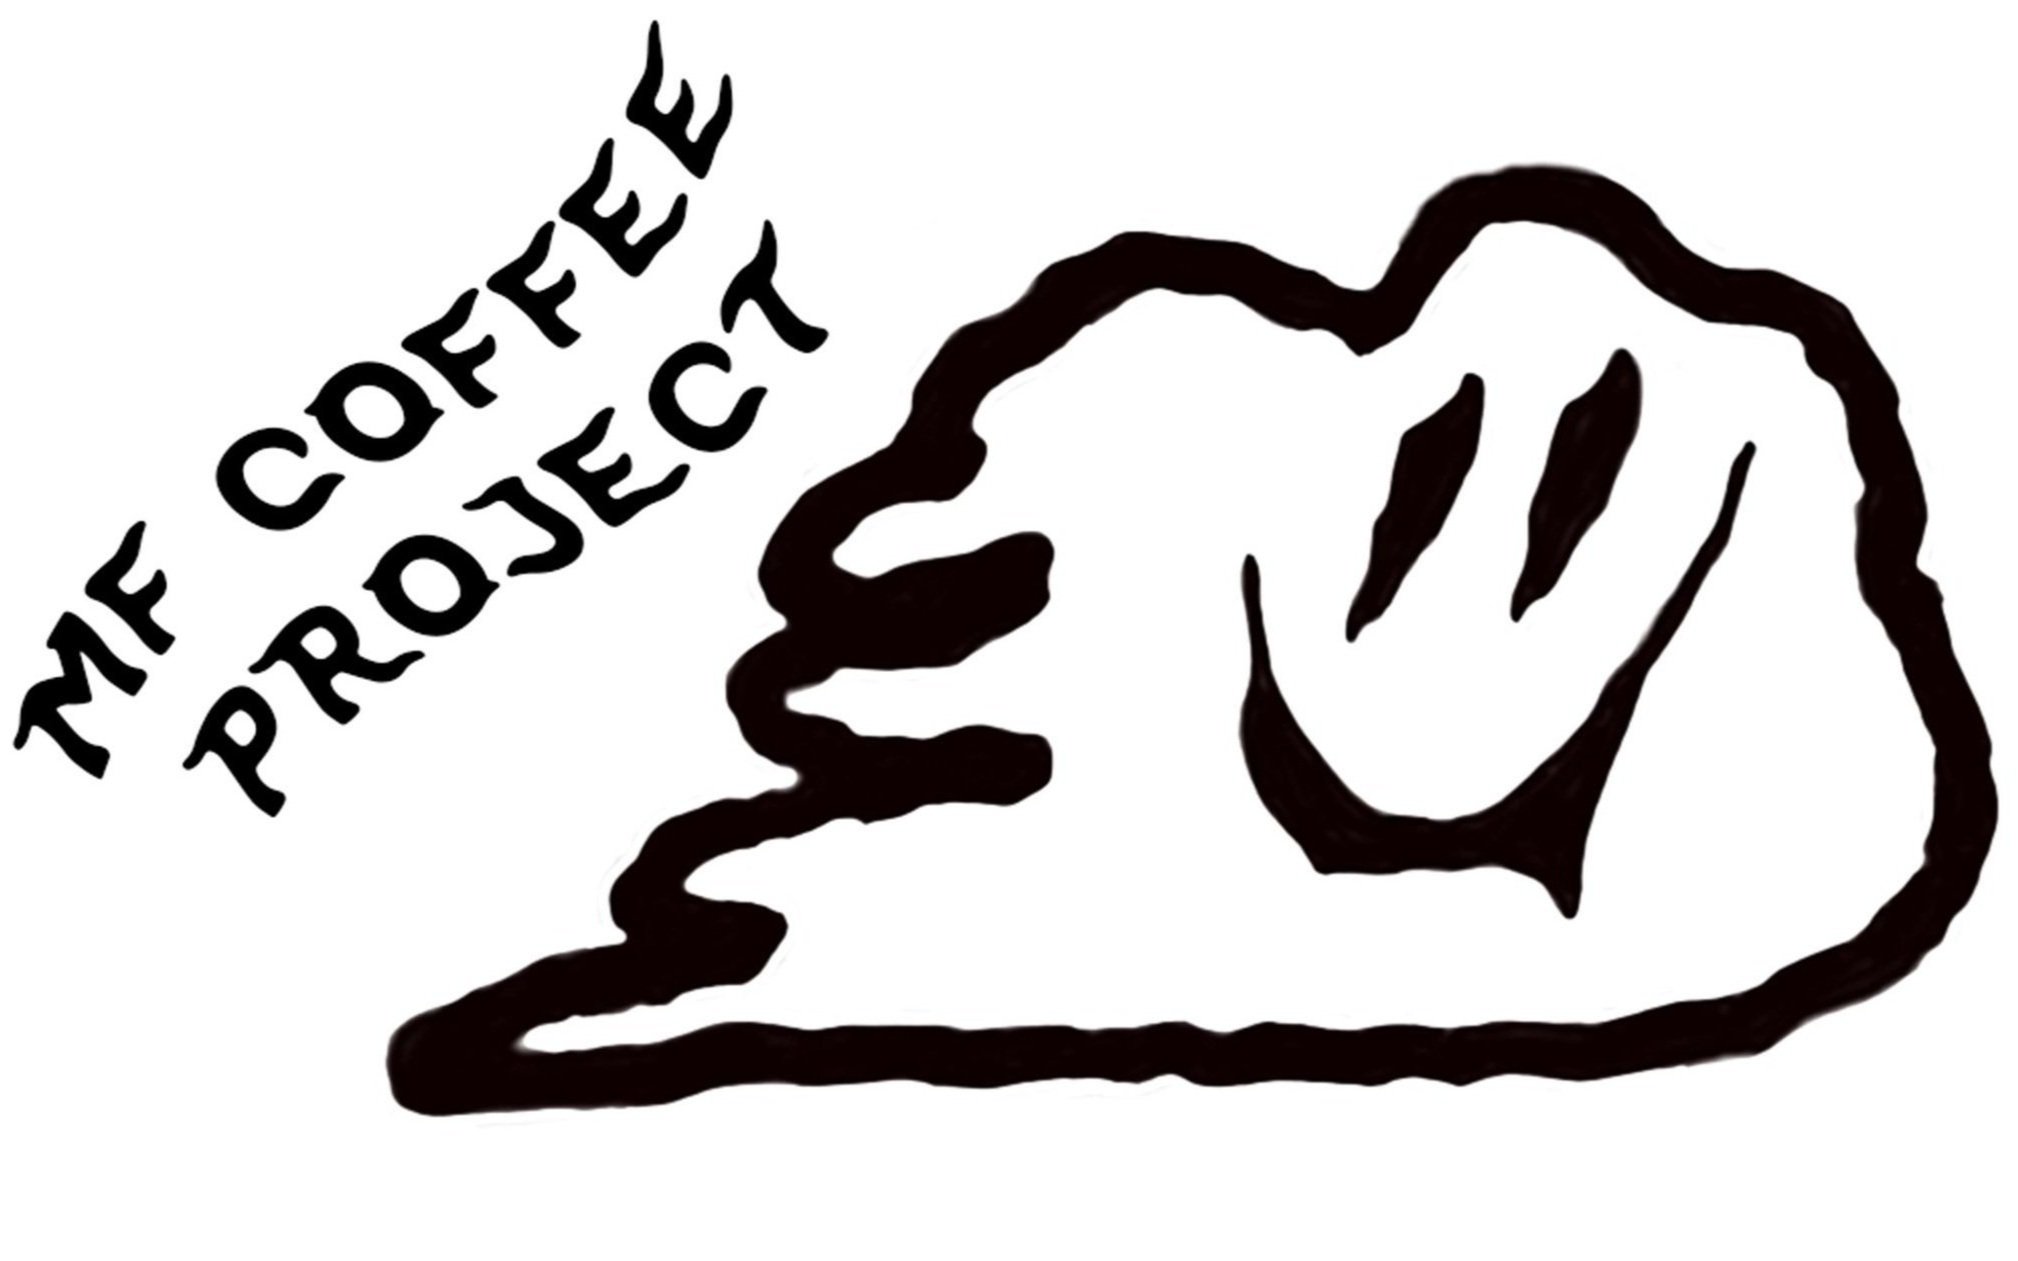 MF Coffee Project